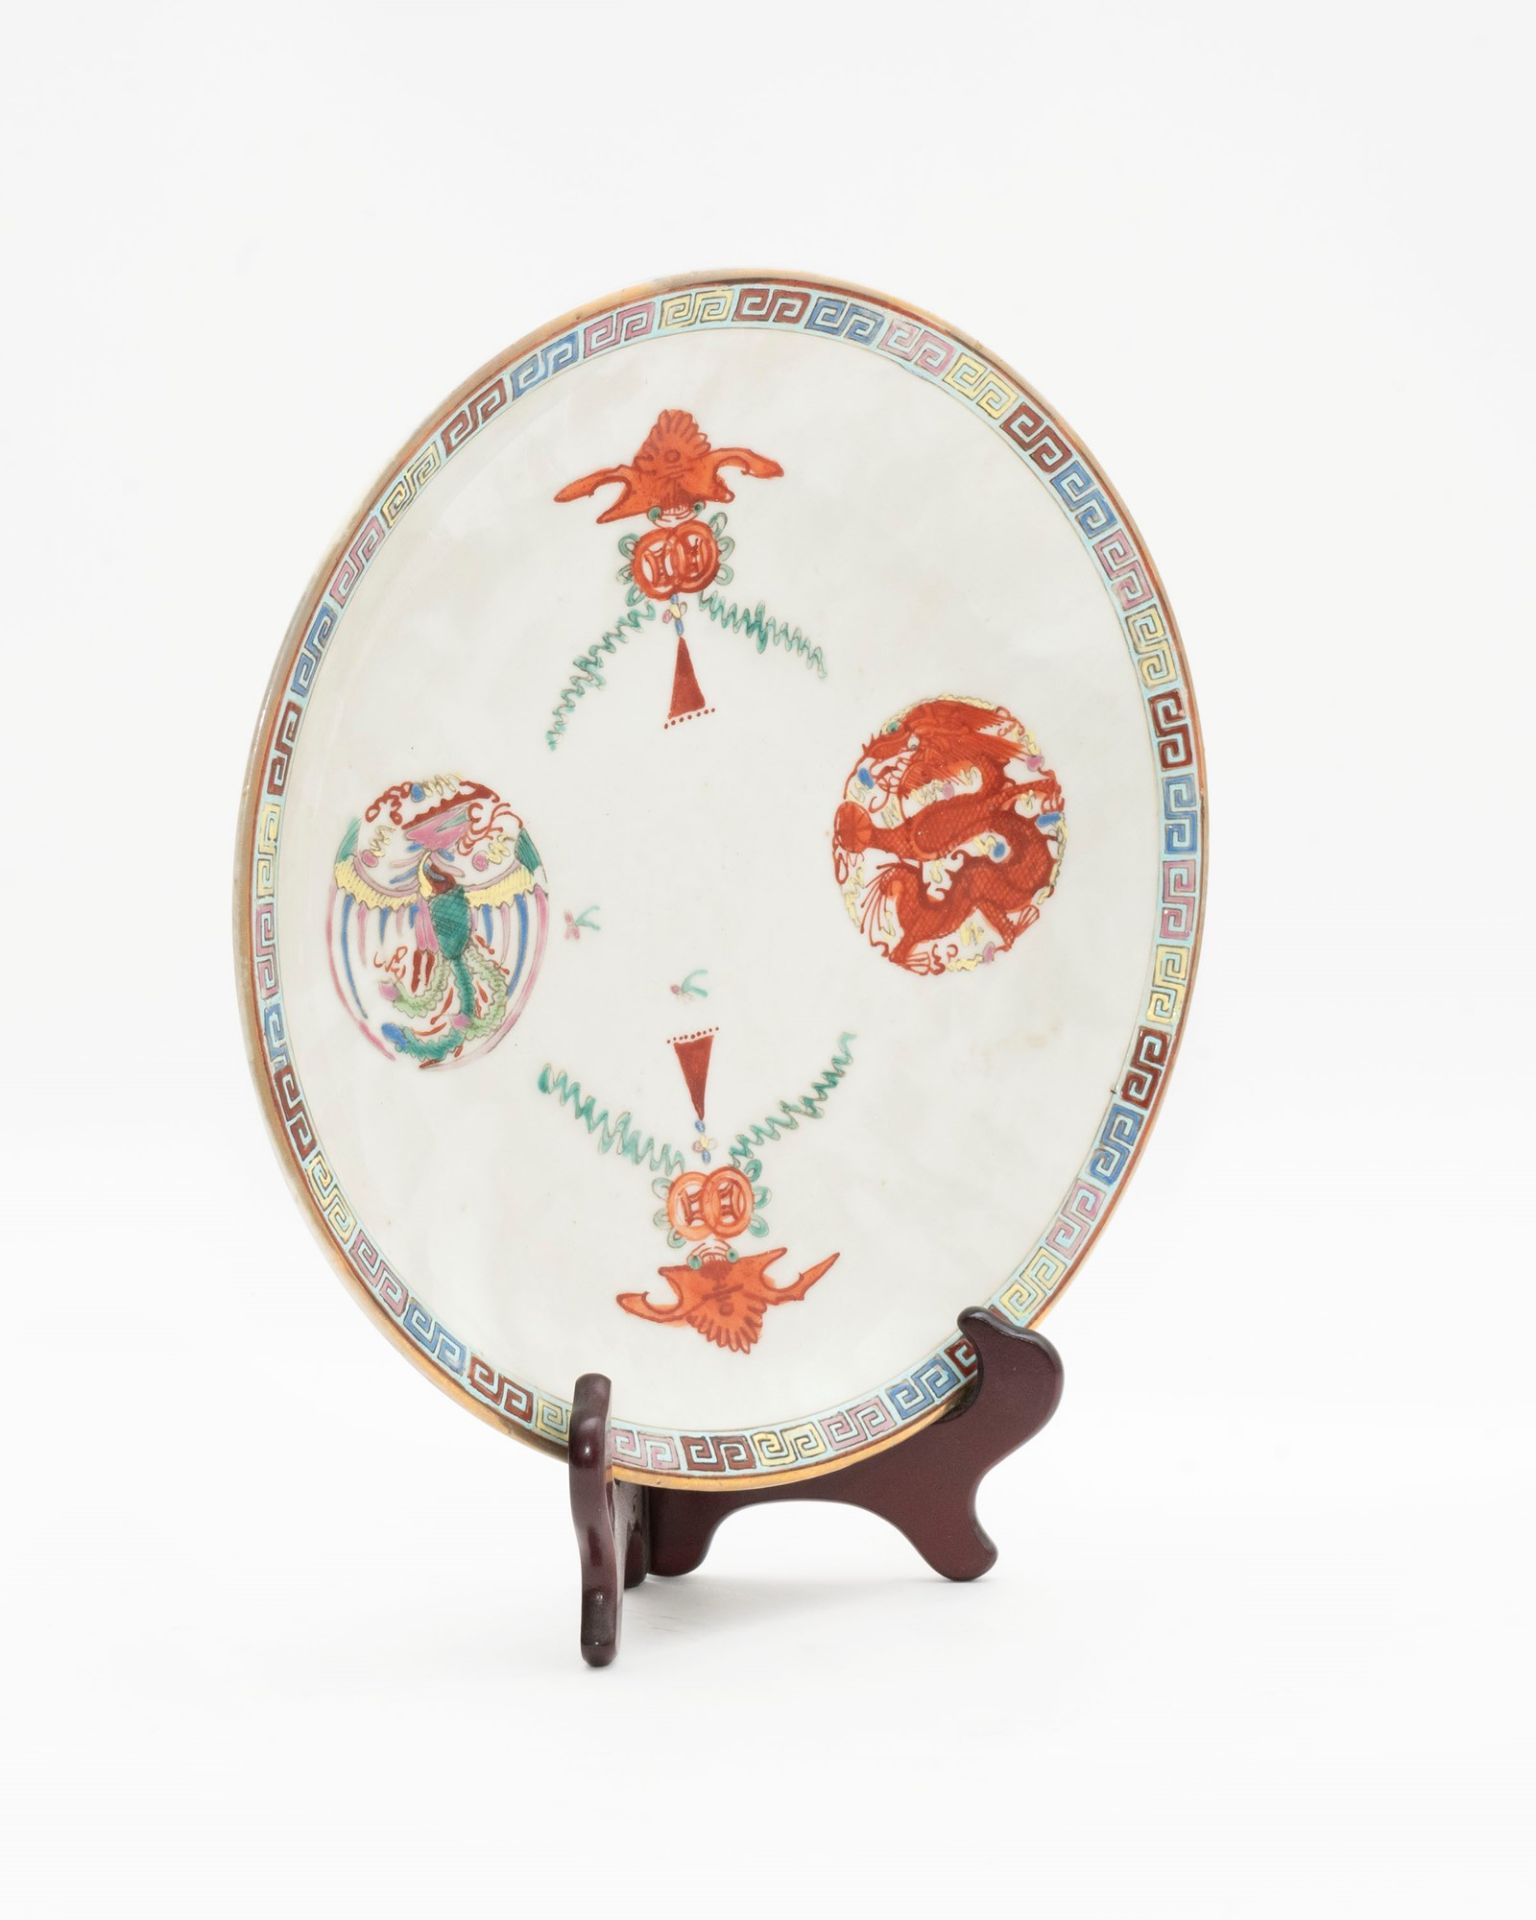 Polychrome porcelain plate, China, 20th century